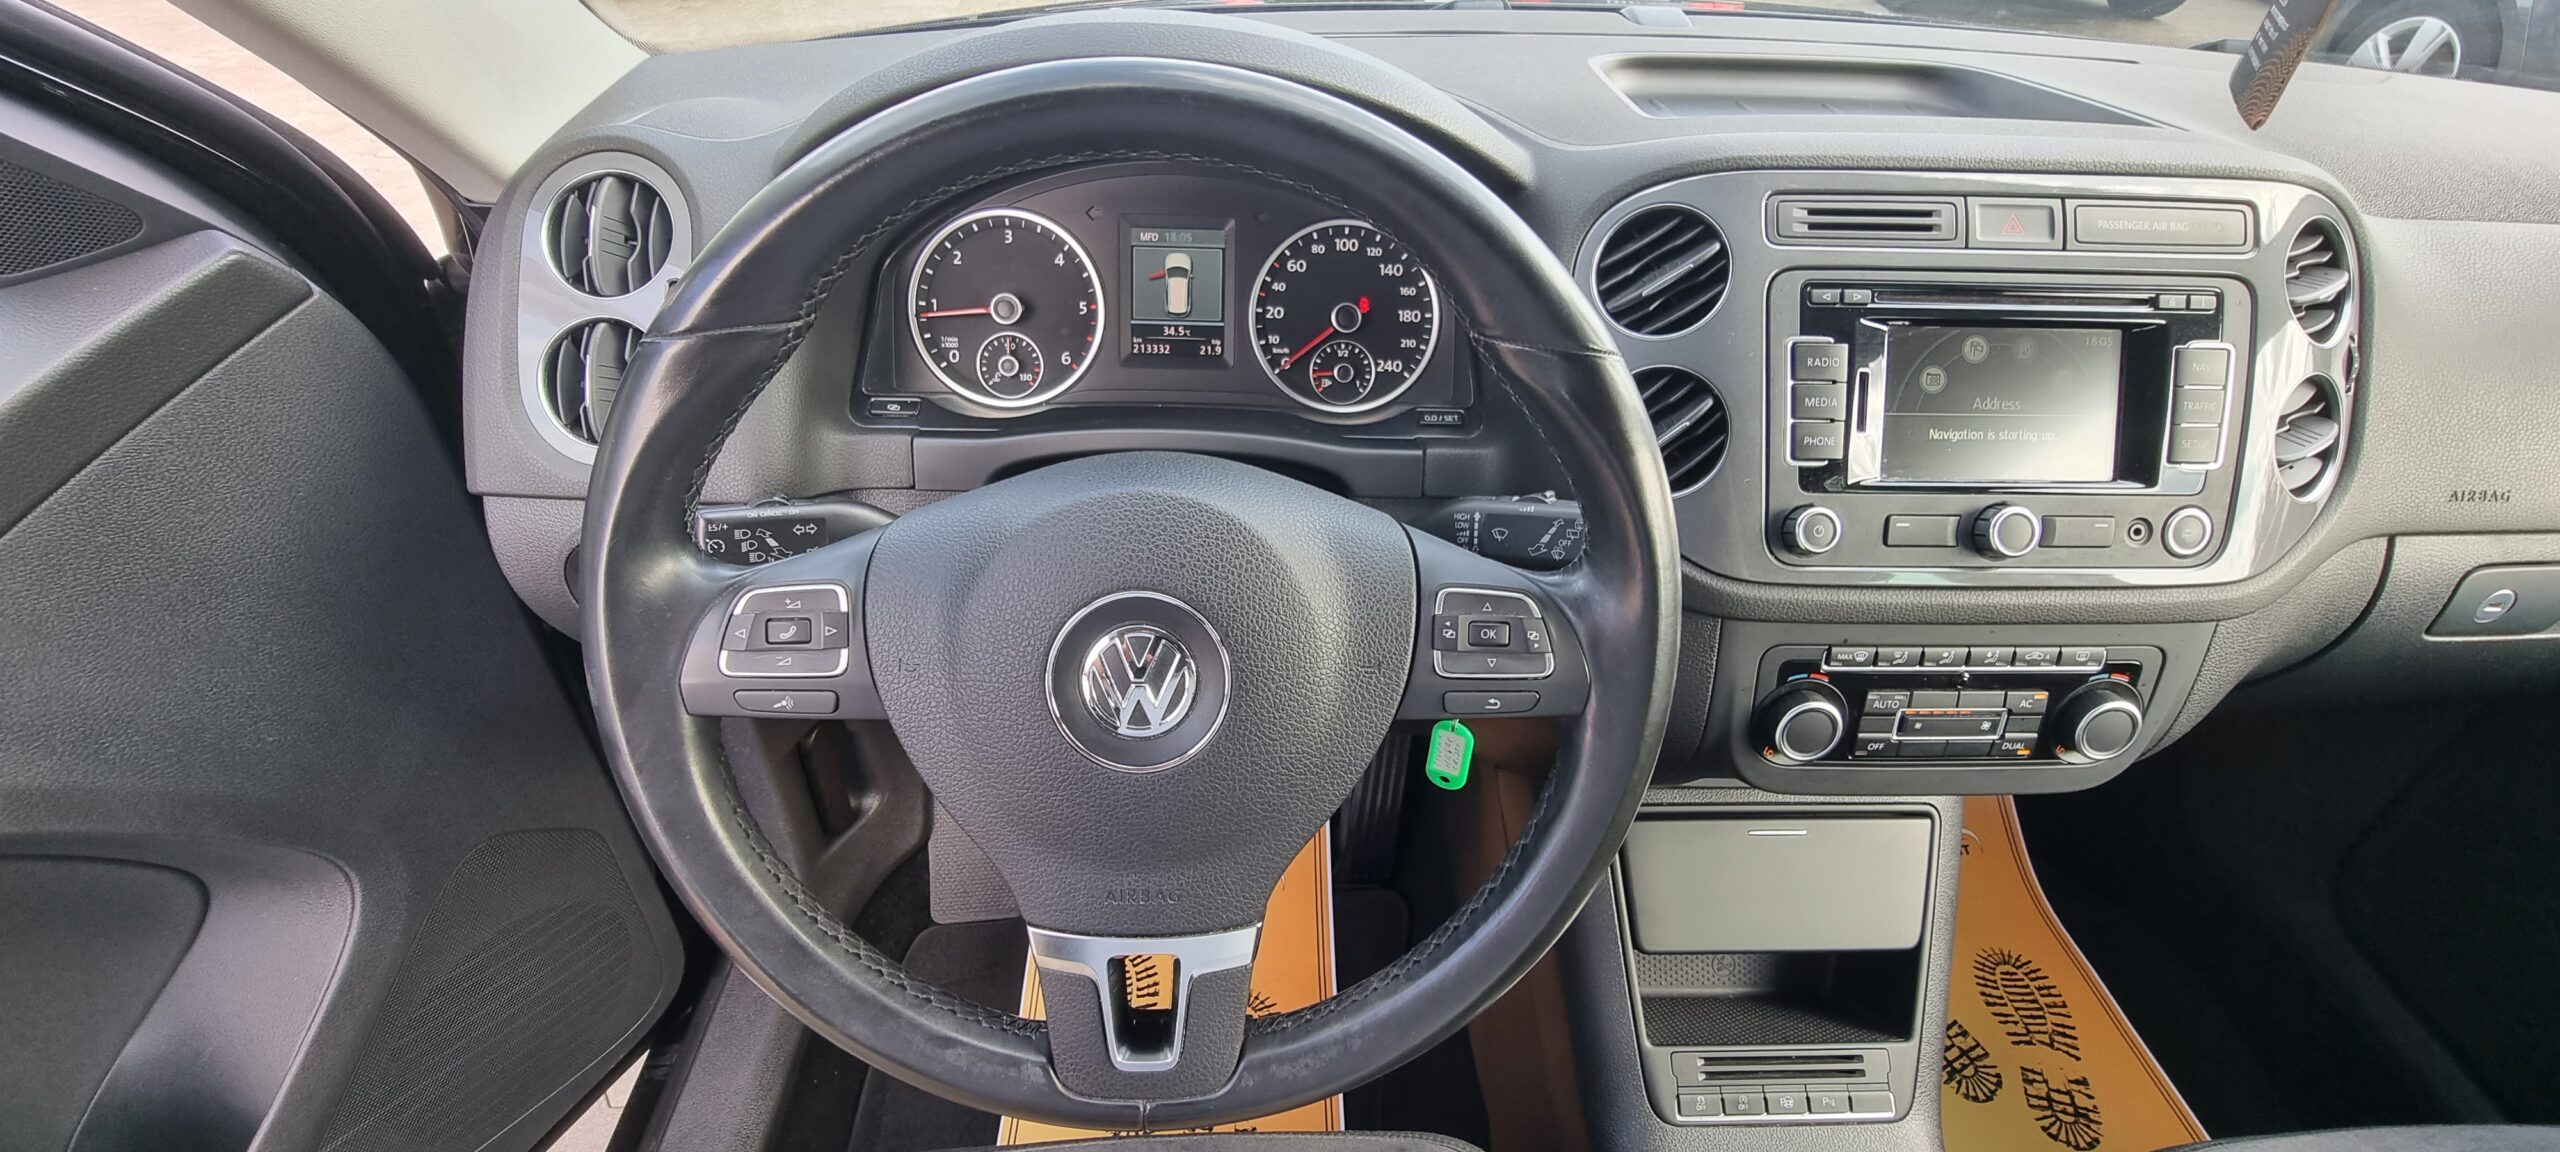 VW TIGUAN 4 MOTION, 2.0 TDI, 140 CP, EURO 5, AN 2012